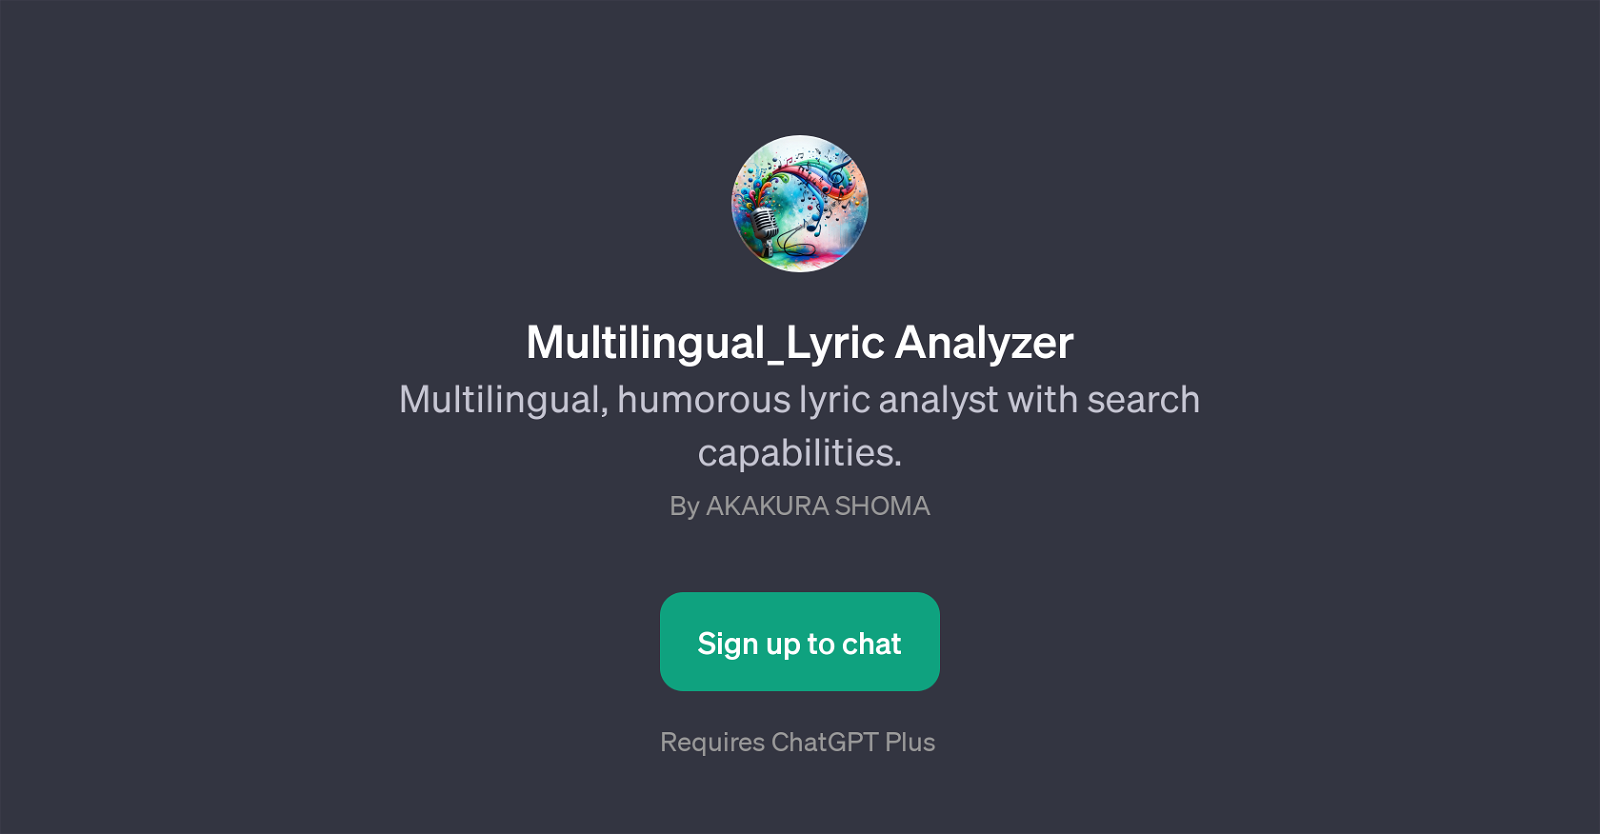 Multilingual_Lyric Analyzer website